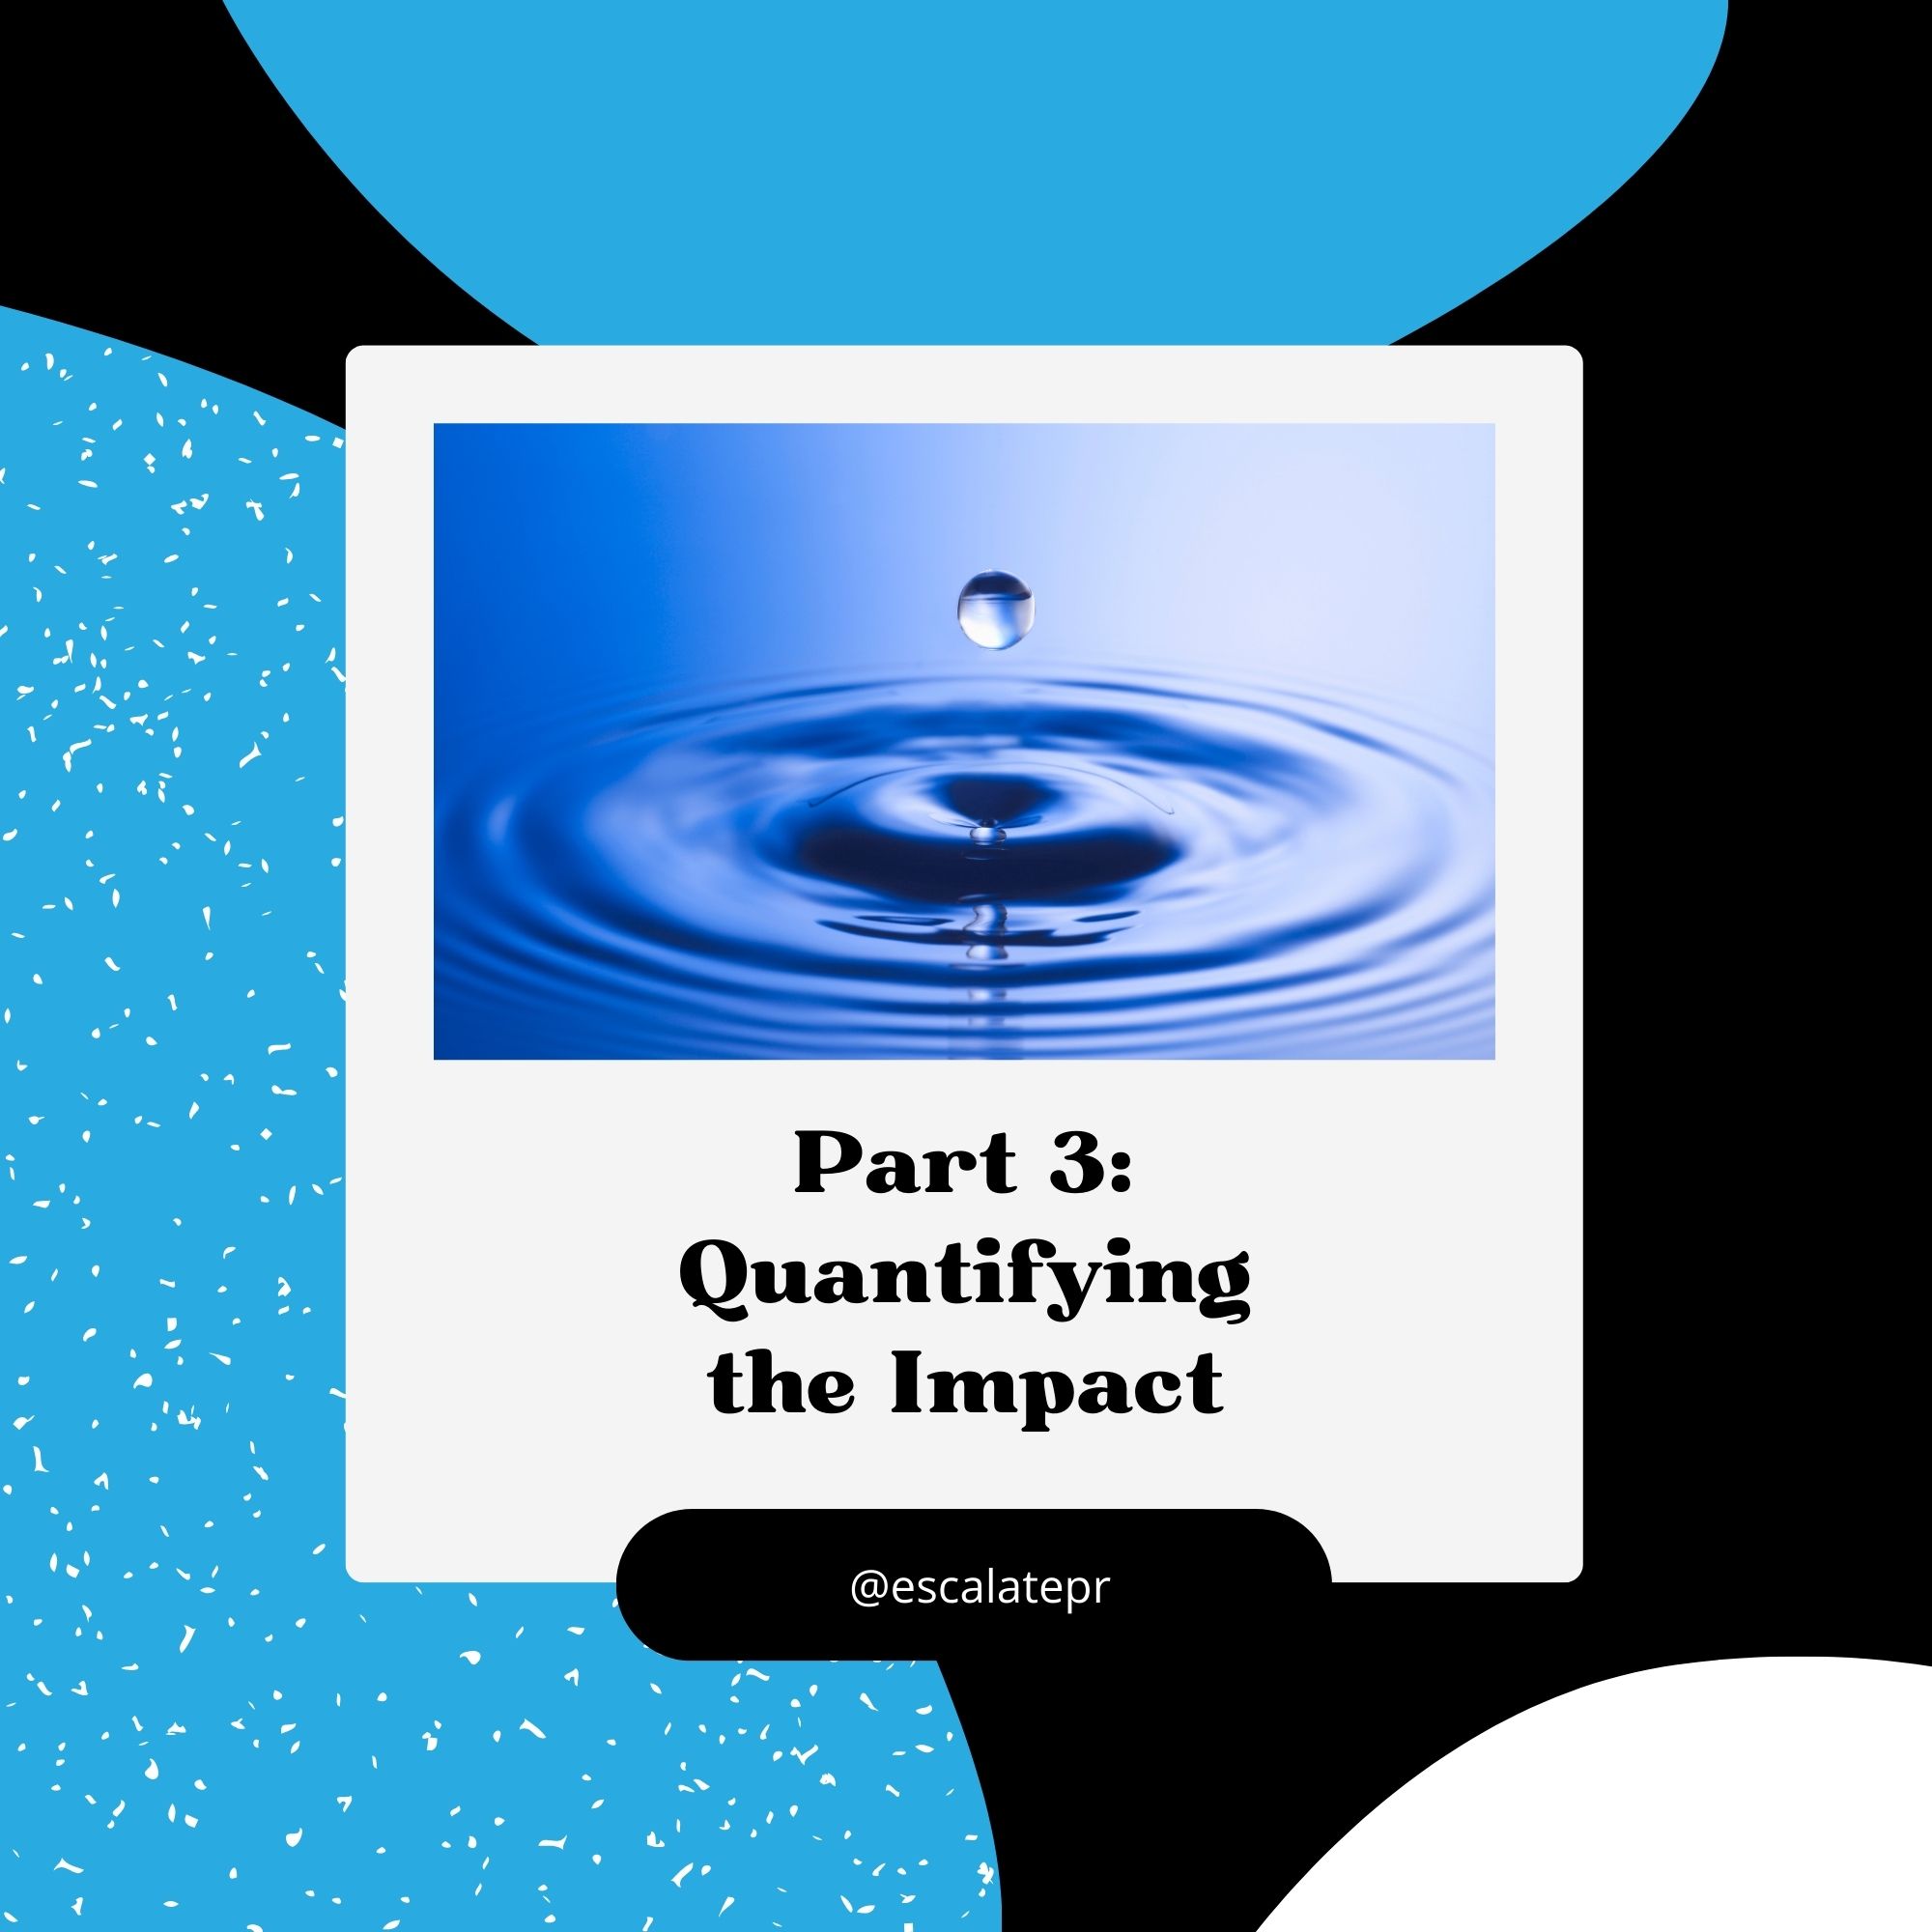 Part 3 - Quantifying the Impact